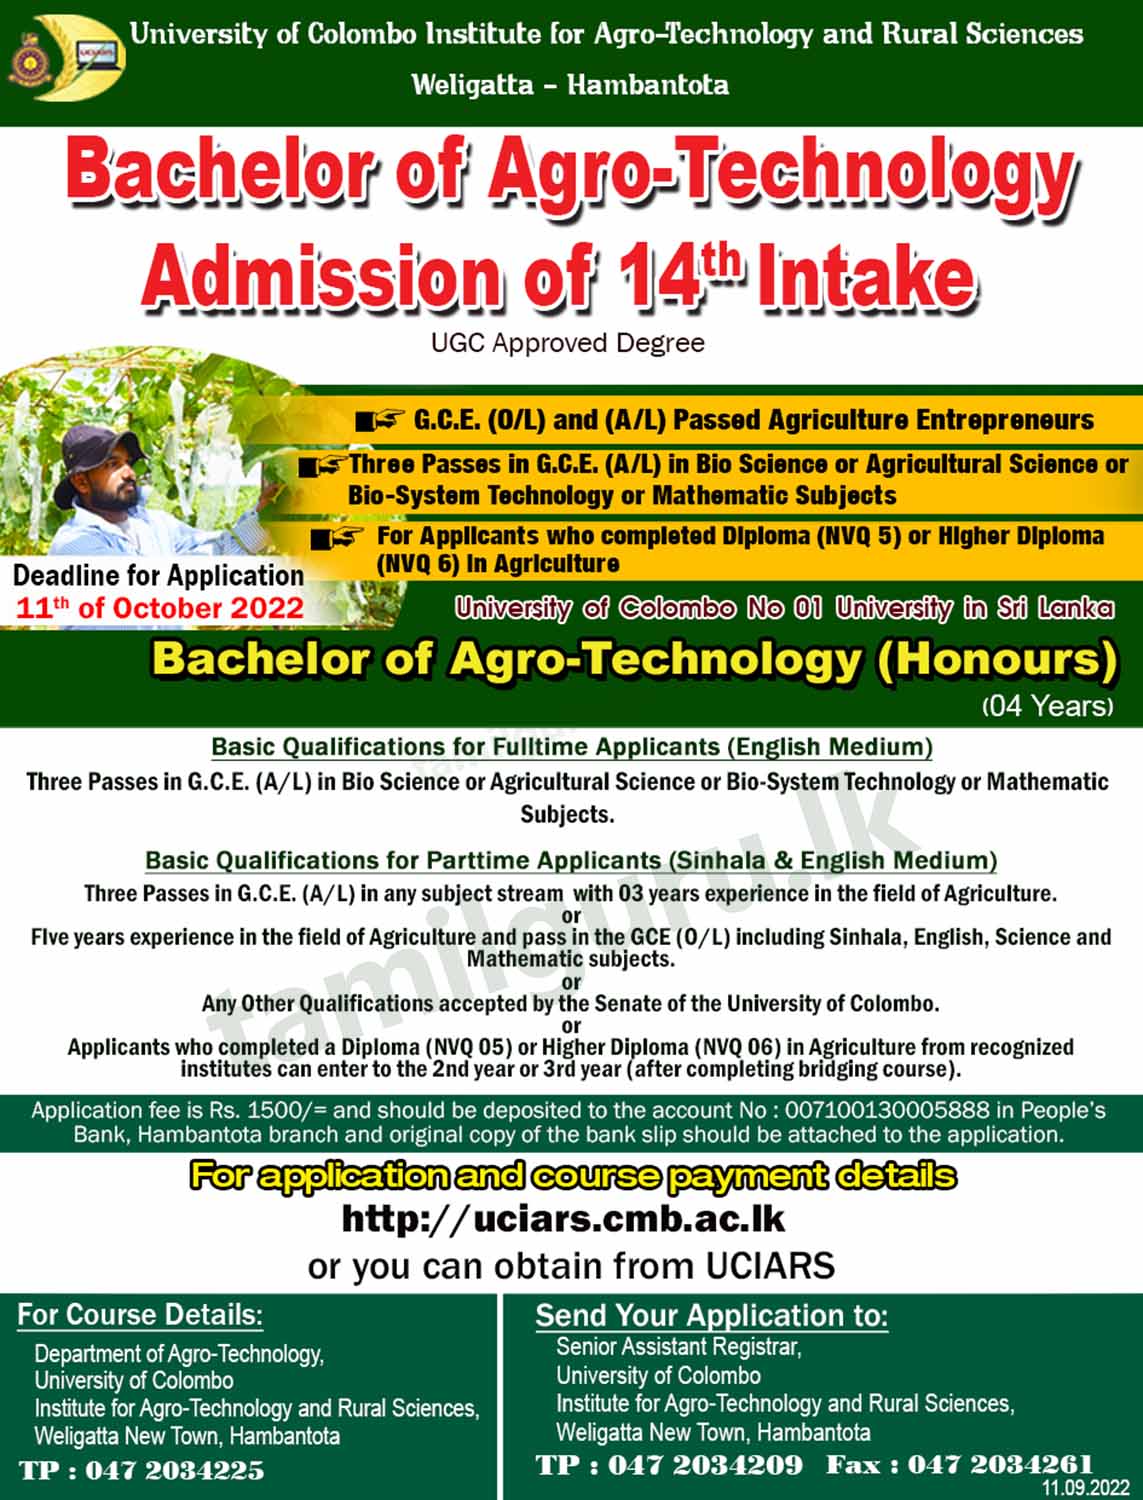 Bachelor of Agro Technology (Hons) Degree Programme 2022 - University of Colombo (UCIARS)